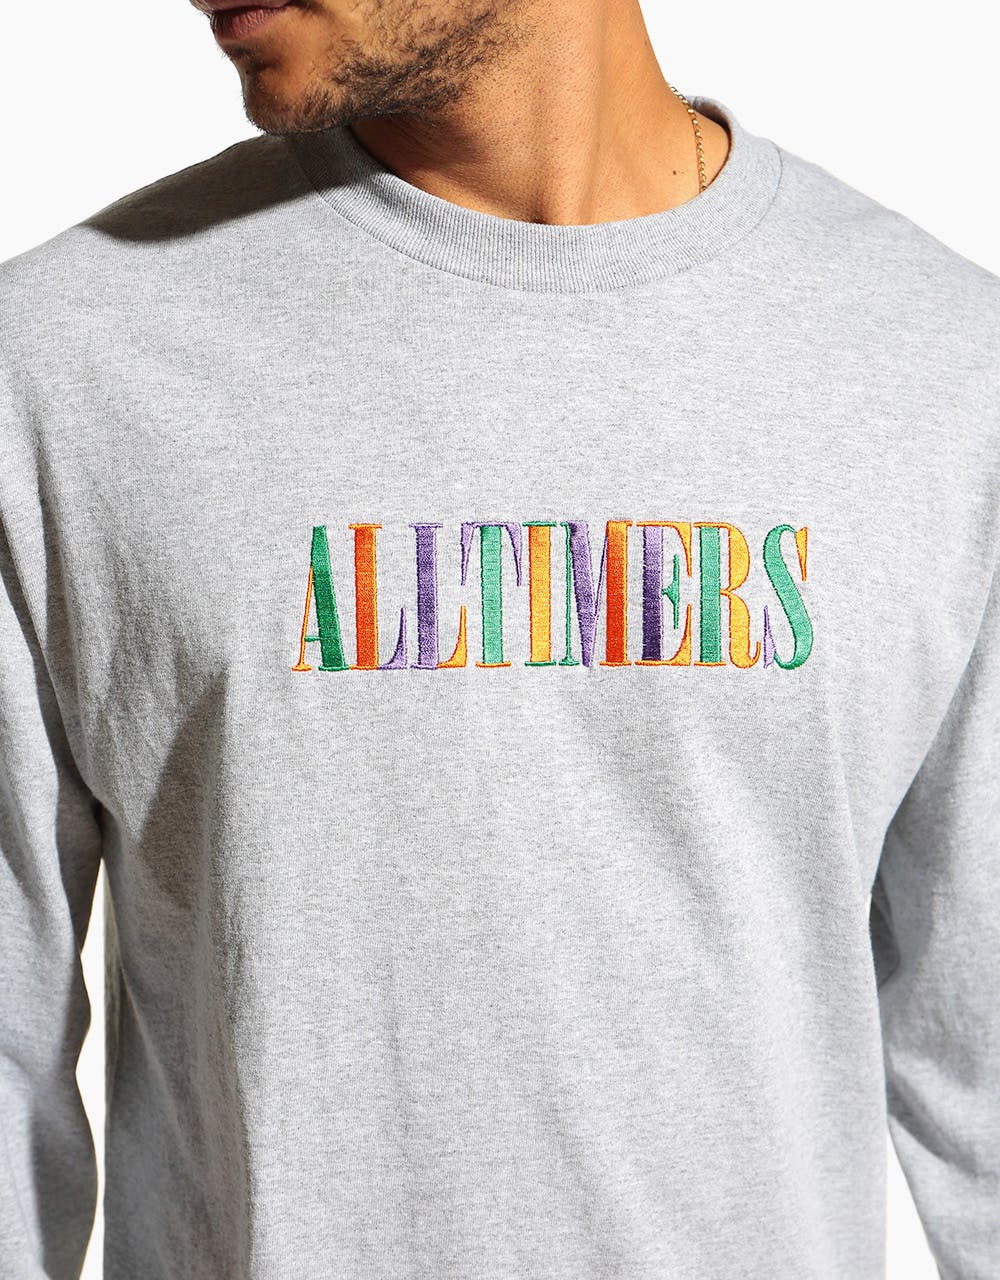 Alltimers Midtown L/S T-Shirt - Heather Grey